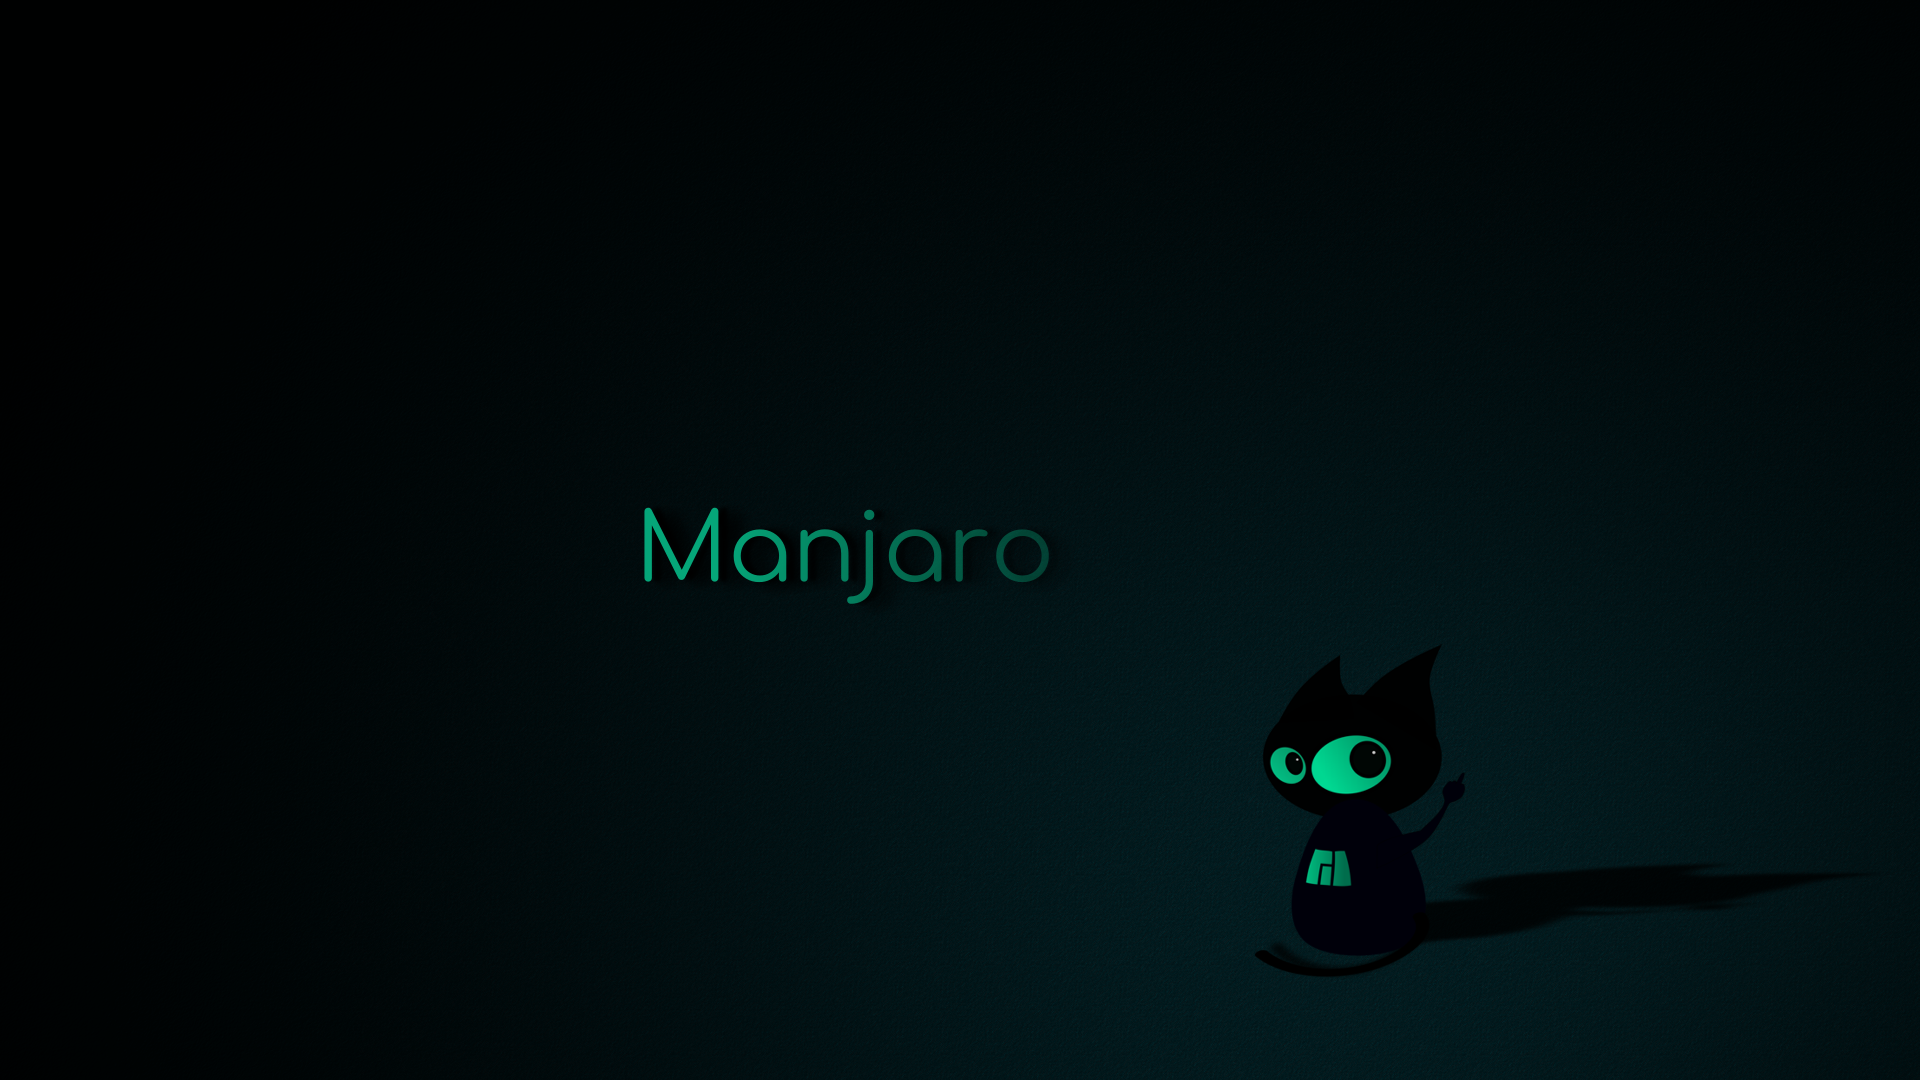 Free download Alternative Manjaro Cat Wallpaper Dark Artistry [1920x1080] for your Desktop, Mobile & Tablet. Explore Manjaro Wallpaper